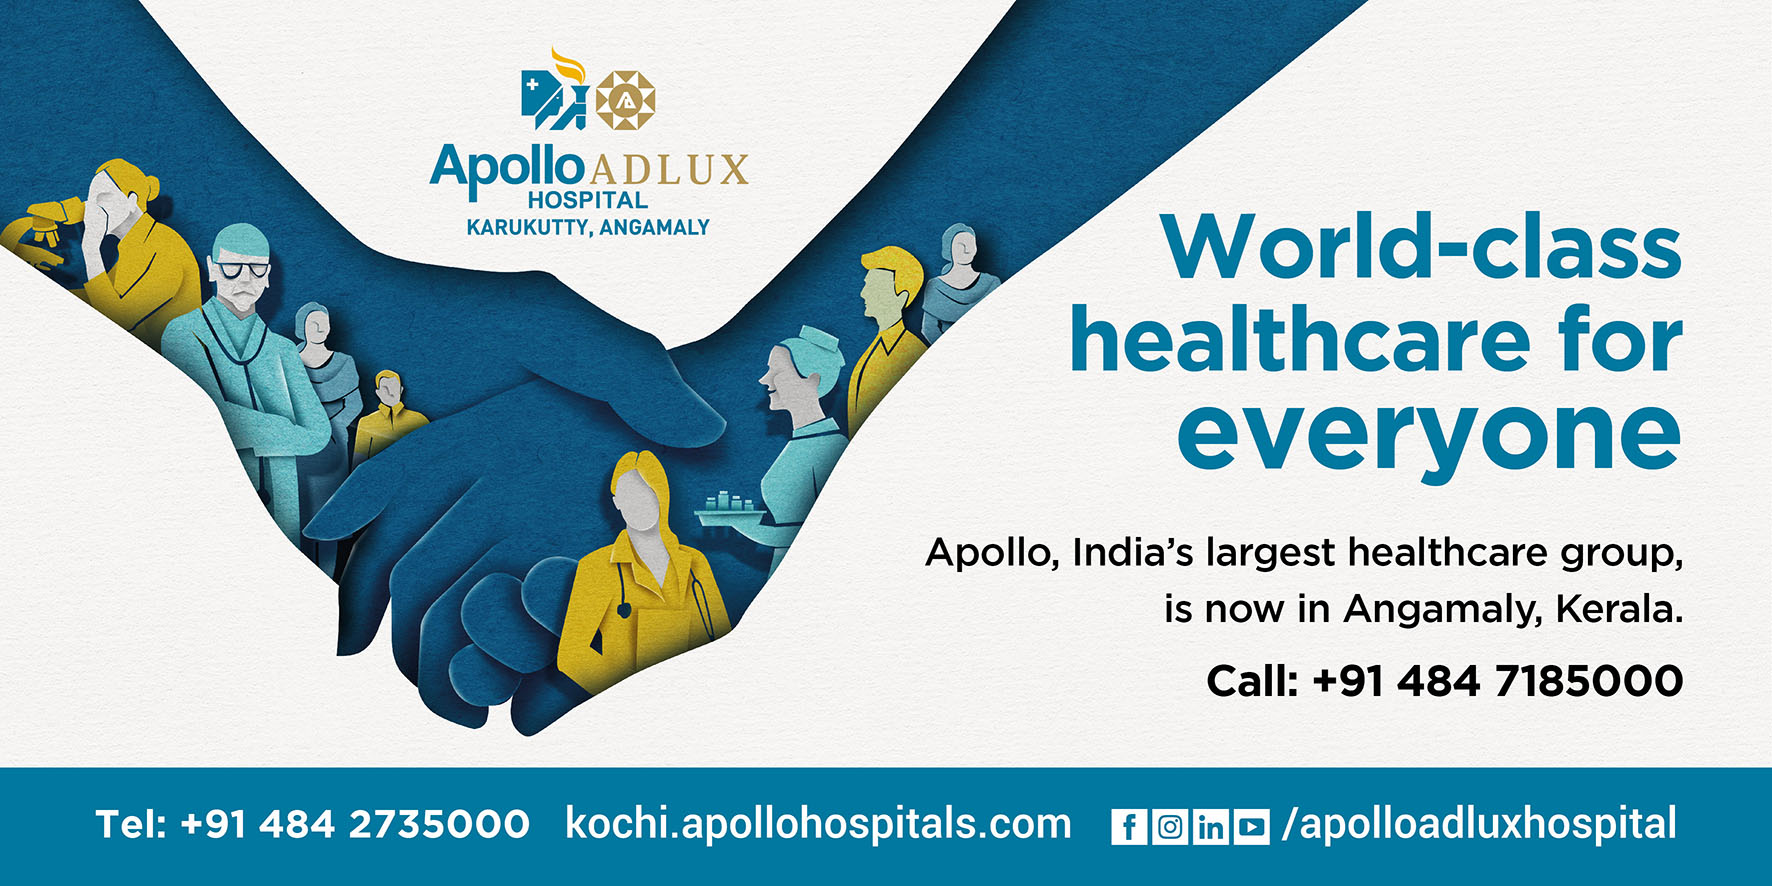 Apollo Adlux Hospital - World Class healthcare for everyone